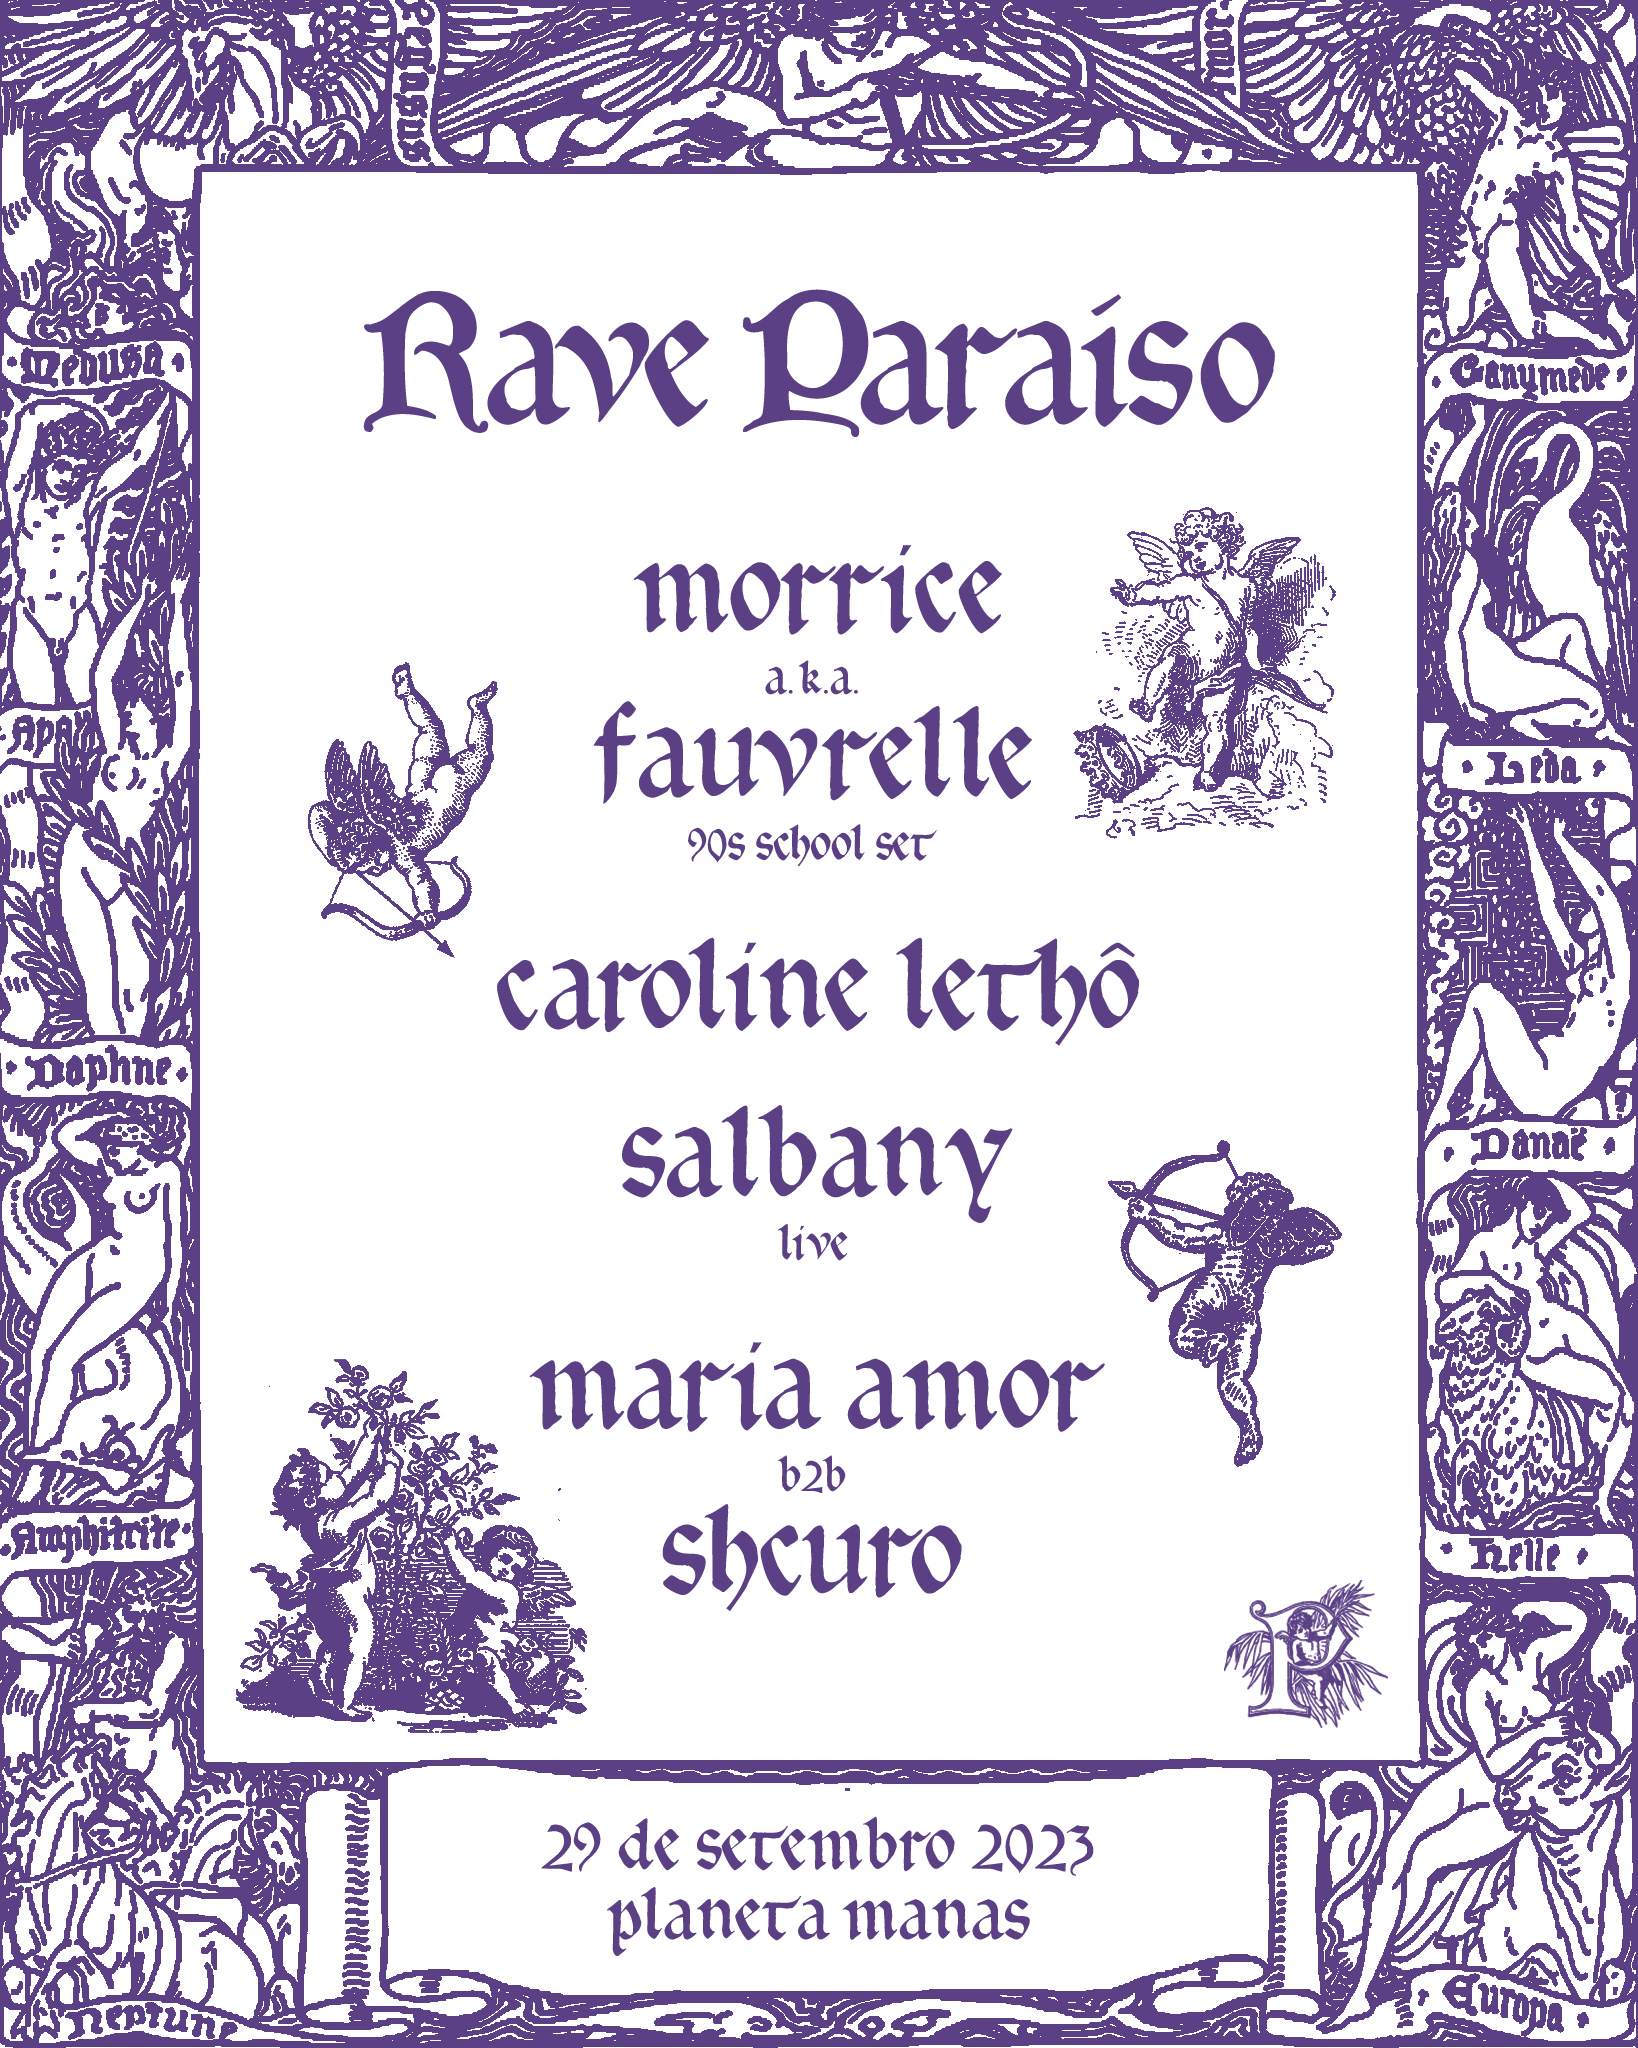 Rave Paraíso - Morrice aka Fauvrelle, Caroline Lethô, Salbany (live), Maria Amor b2b Shcuro - Página frontal